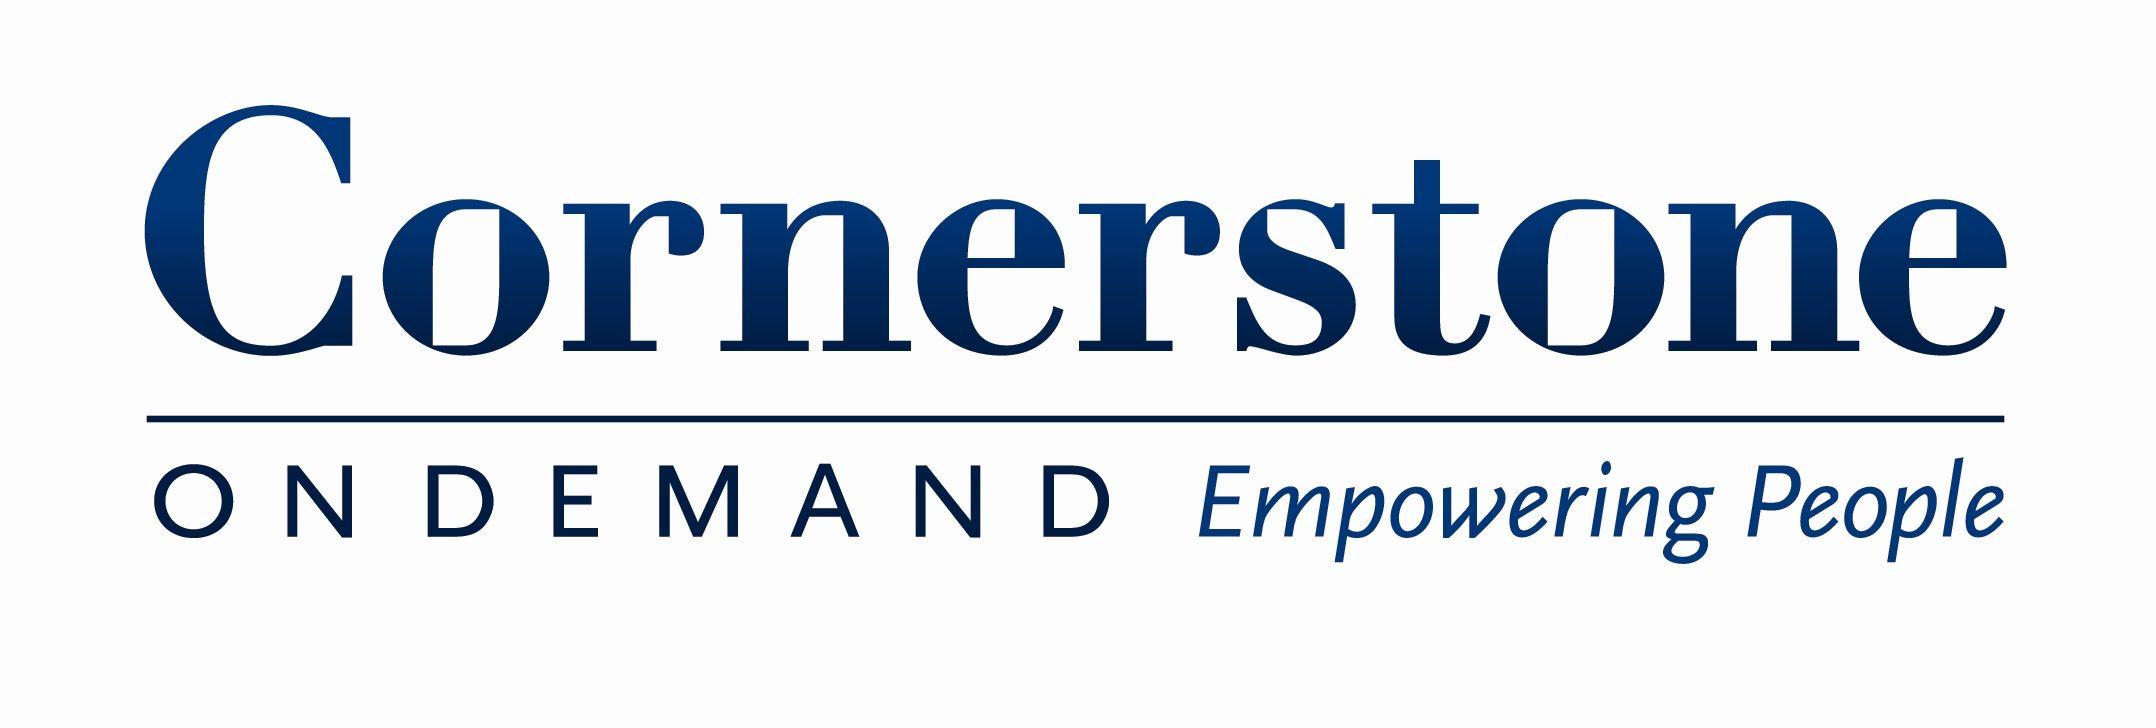 Cornerstone Logo - Cornerstone on demand Logos